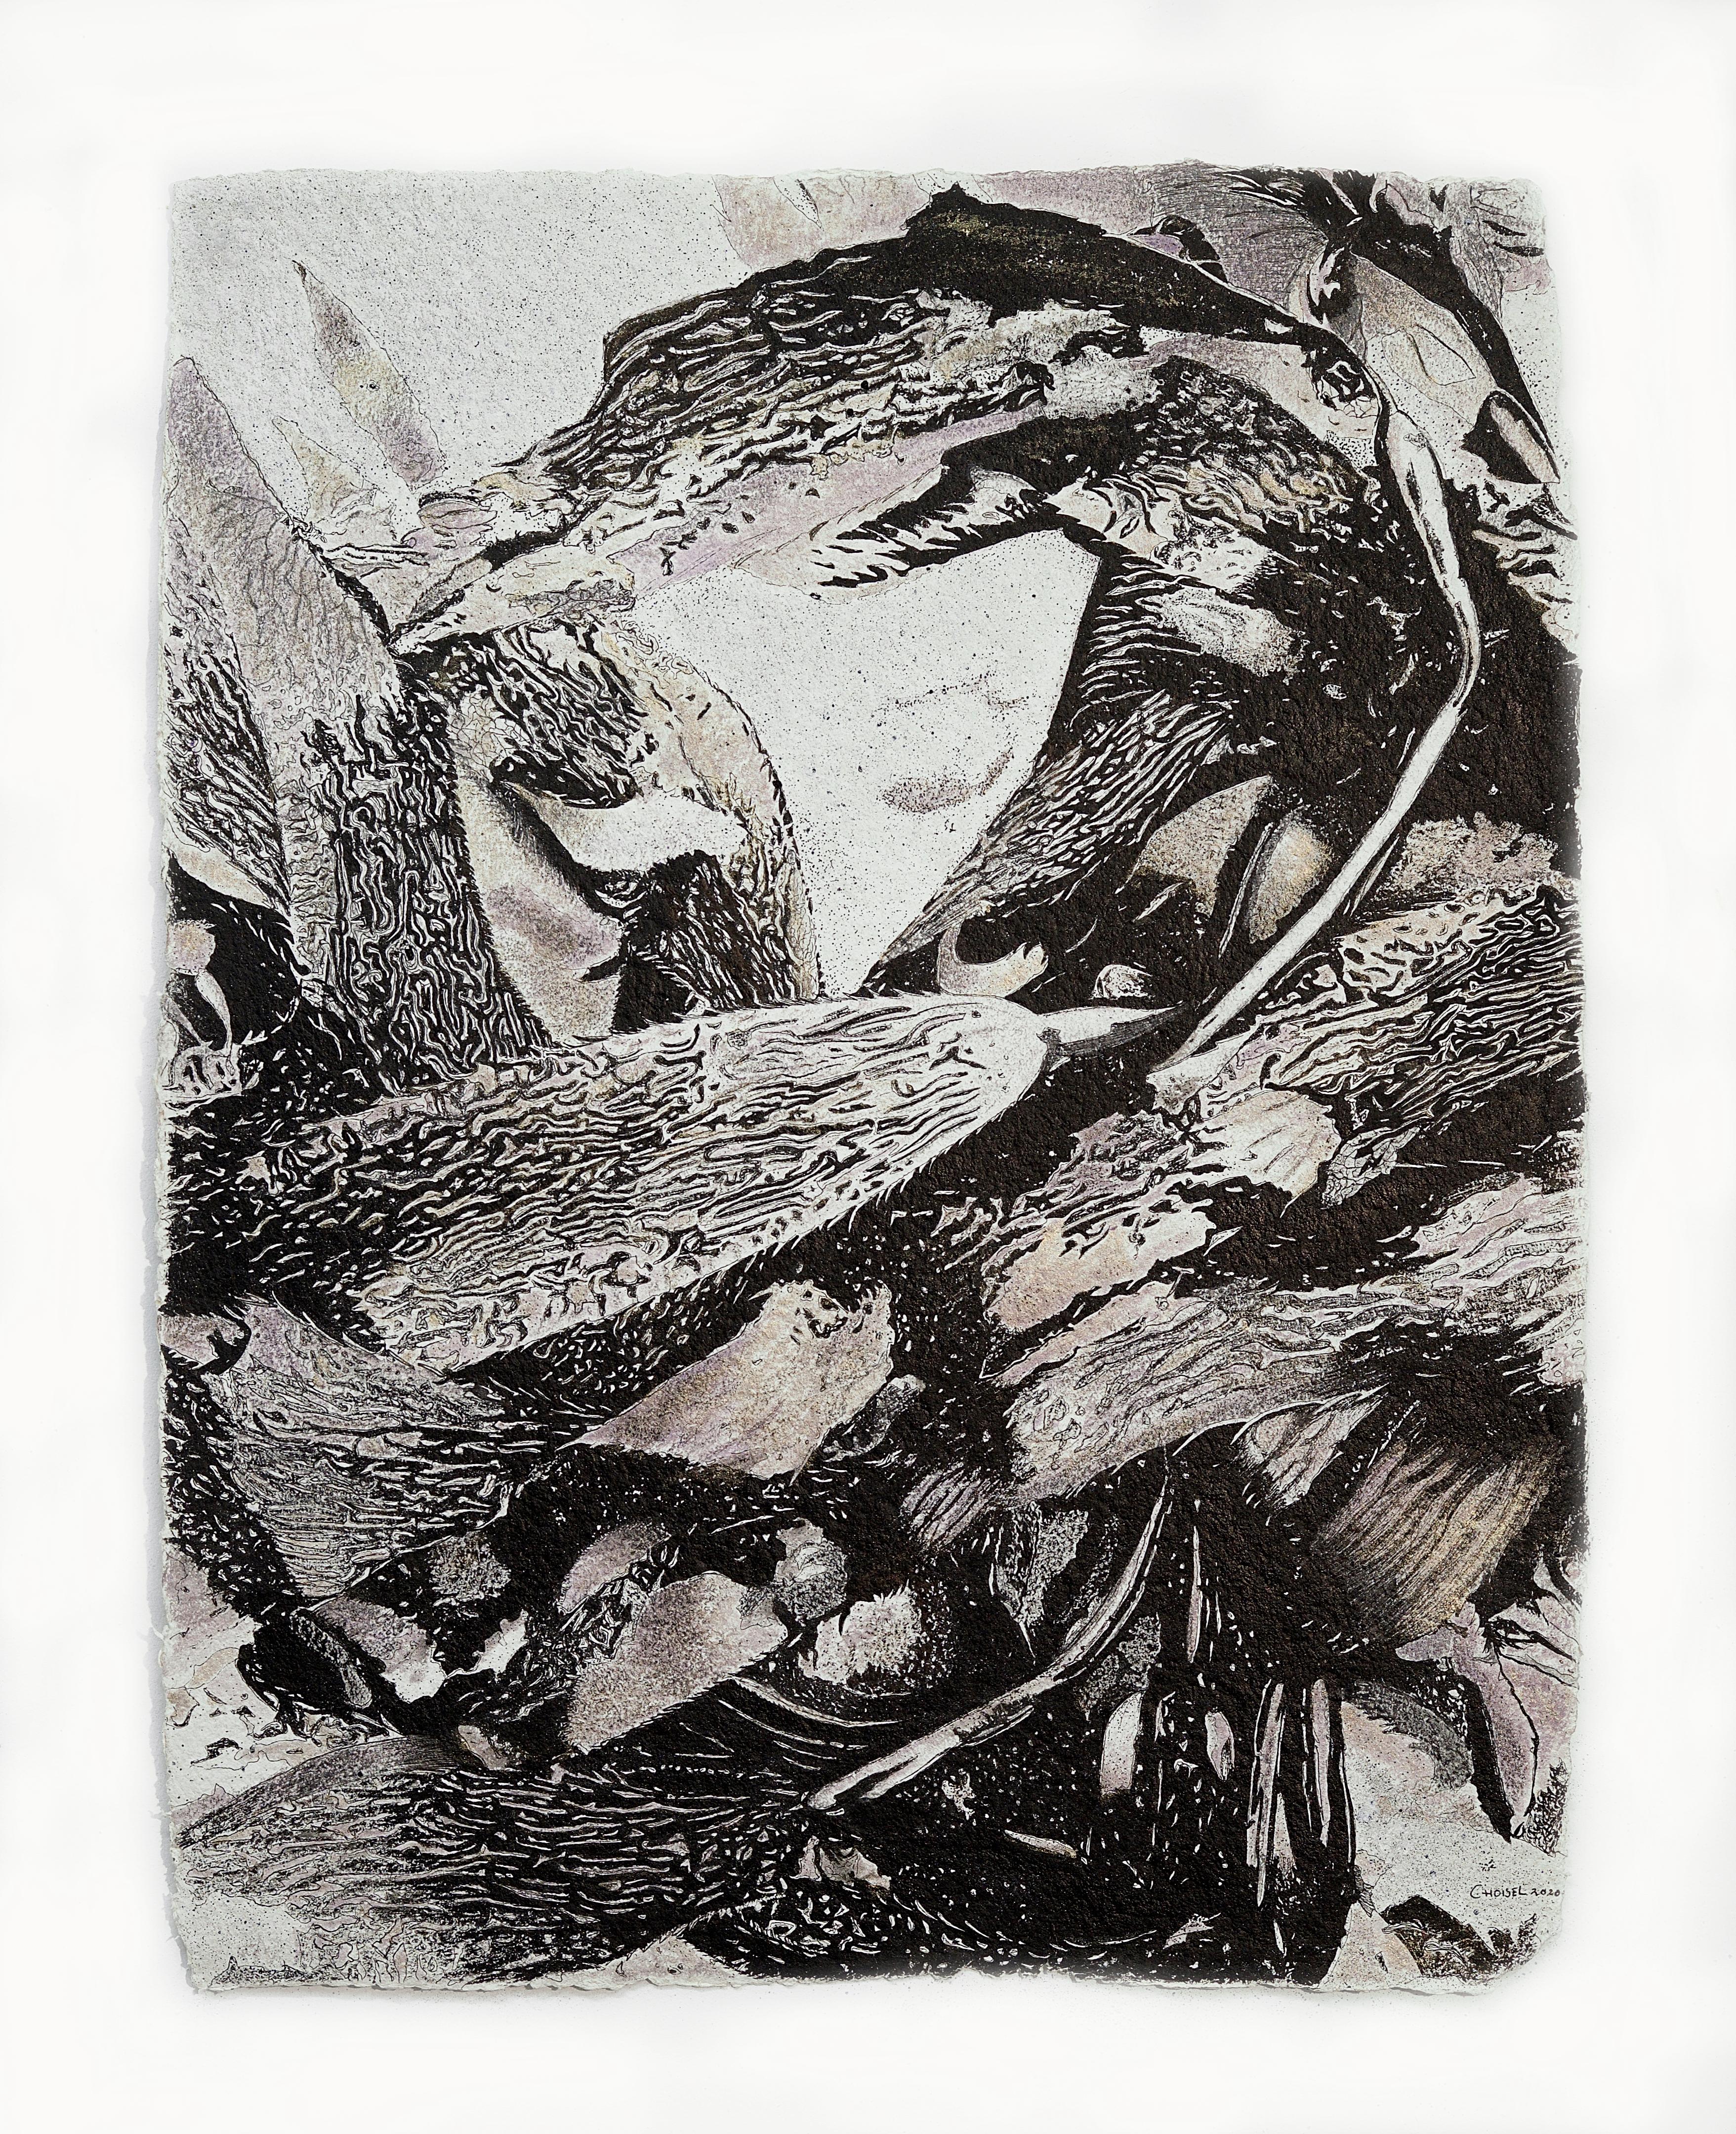 Frédéric Choisel Abstract Painting – Alga Aligata Nr. 5 – oceanisches, abstrahiertes Werk aus Seetang auf Papier